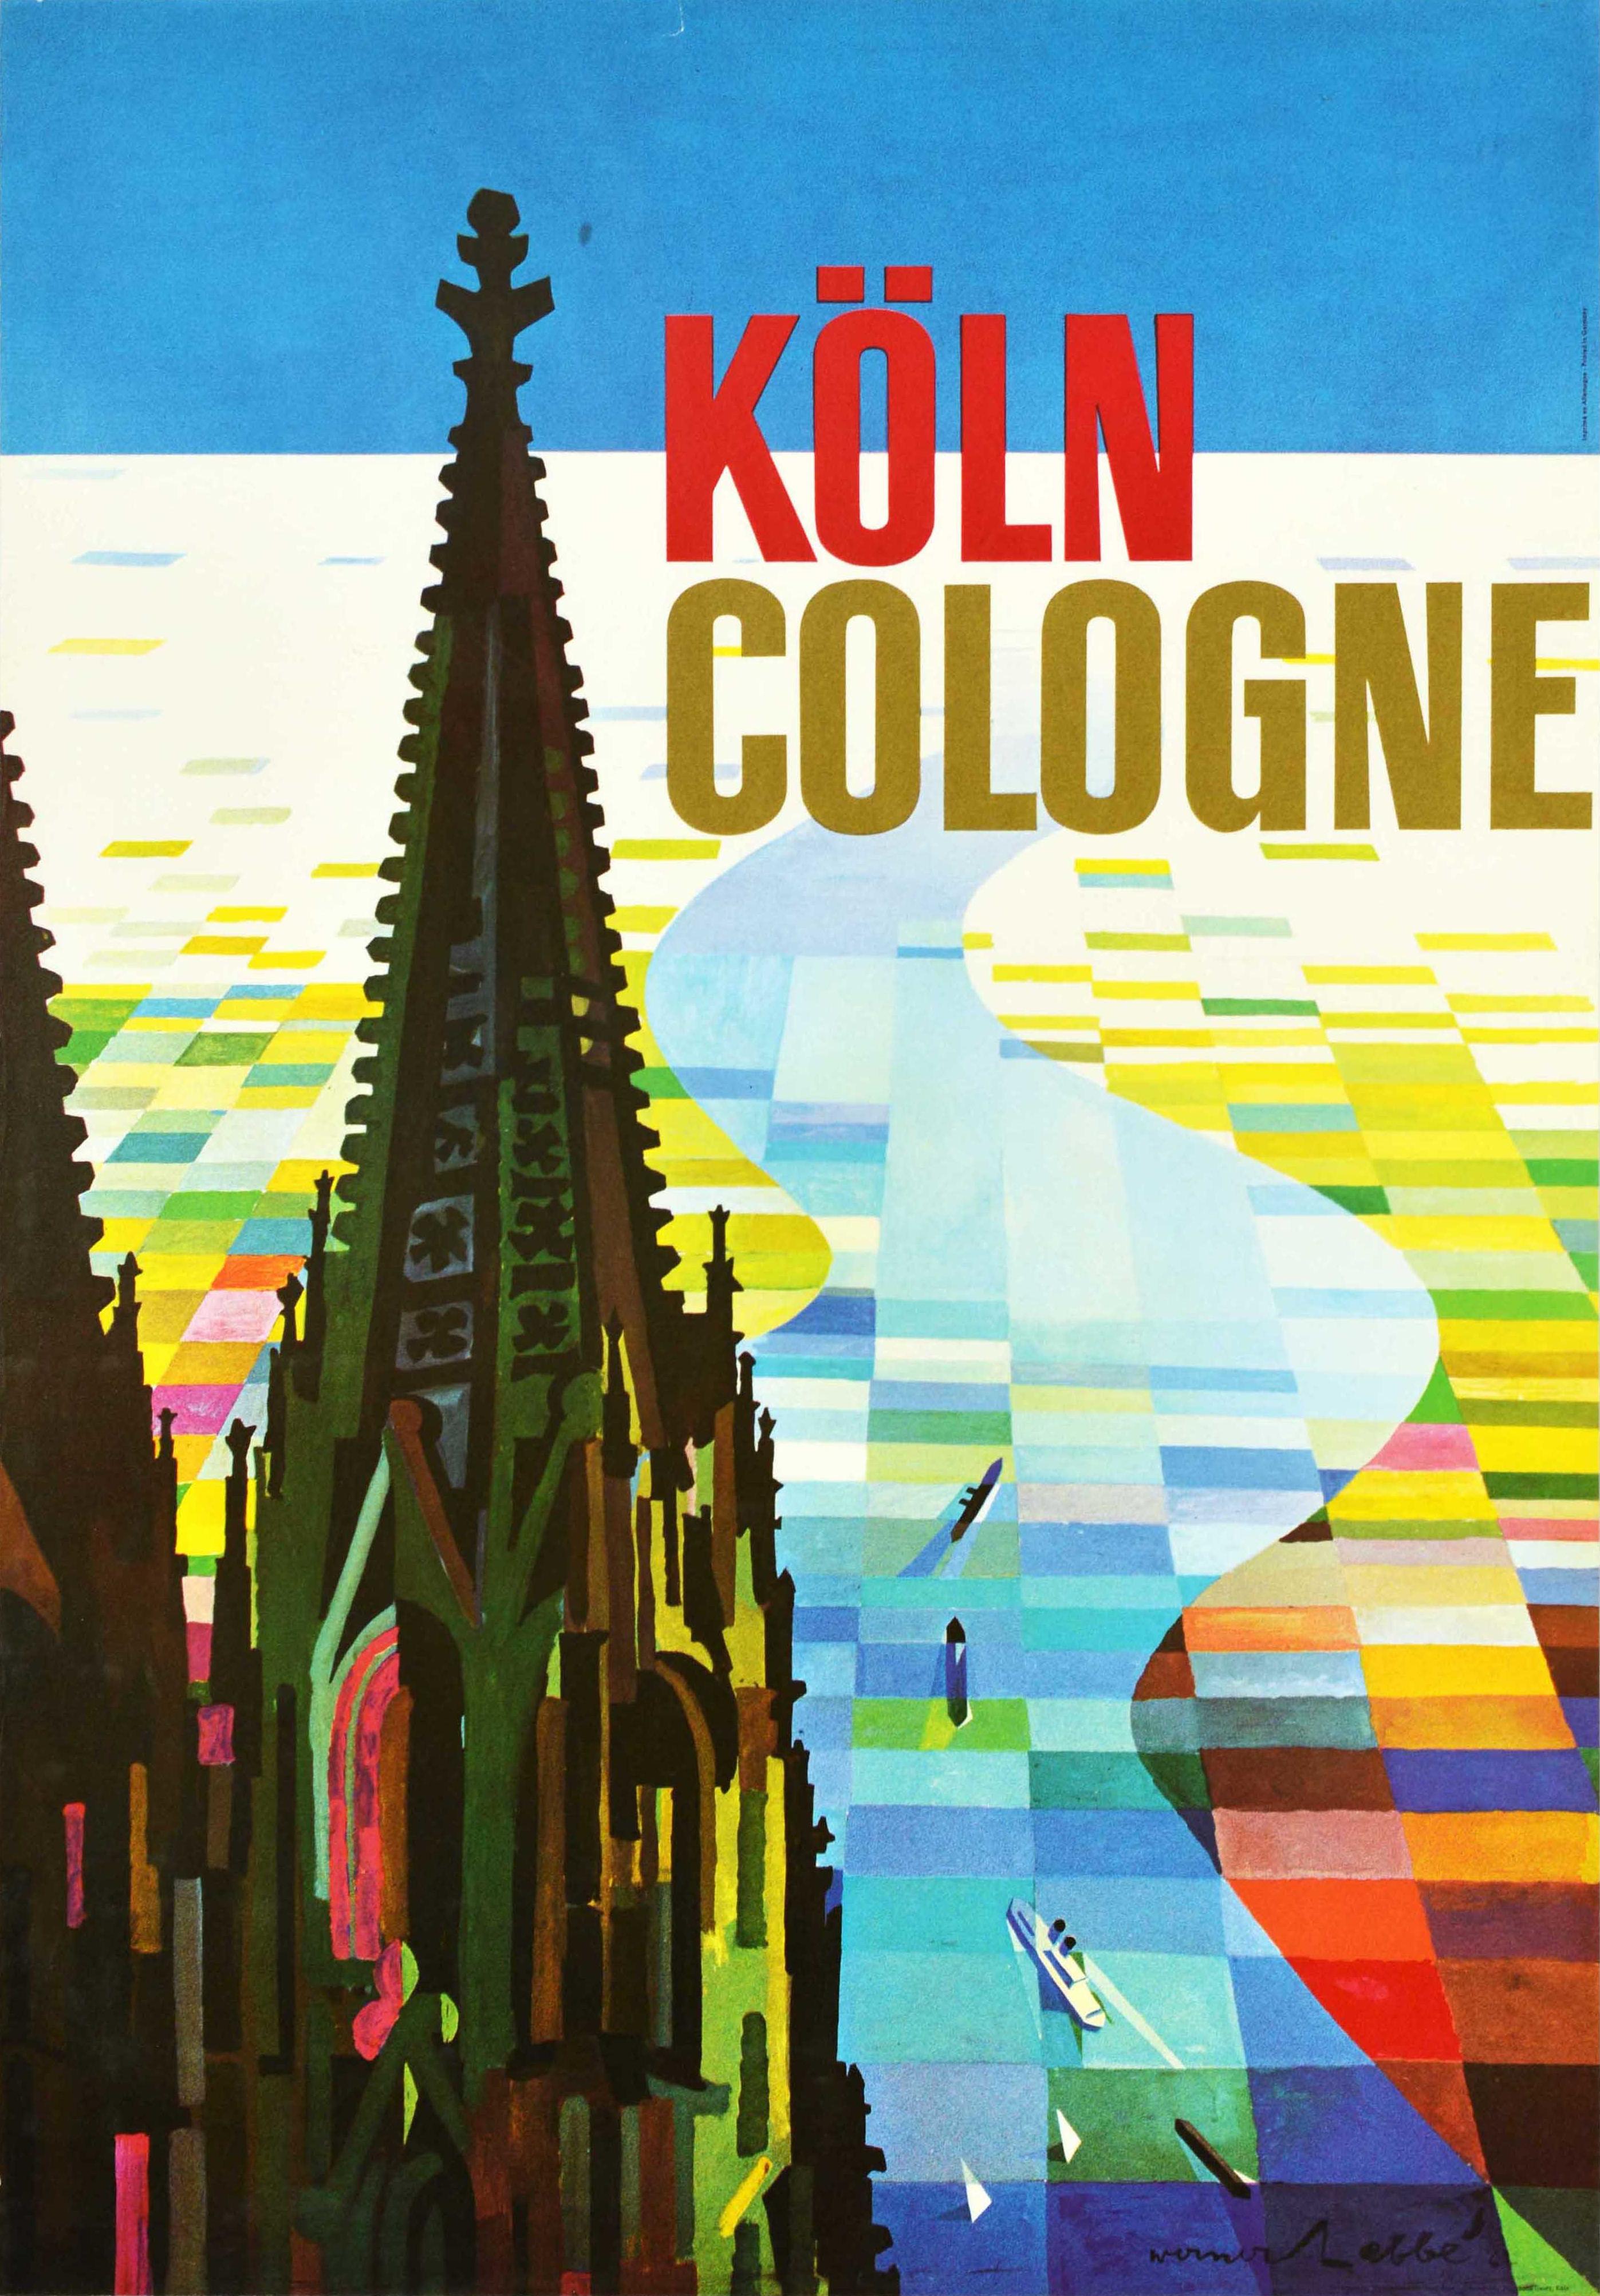 Werner Labbe Print - Original Vintage Travel Poster Koln Cologne Cathedral Germany Mid-Century Modern